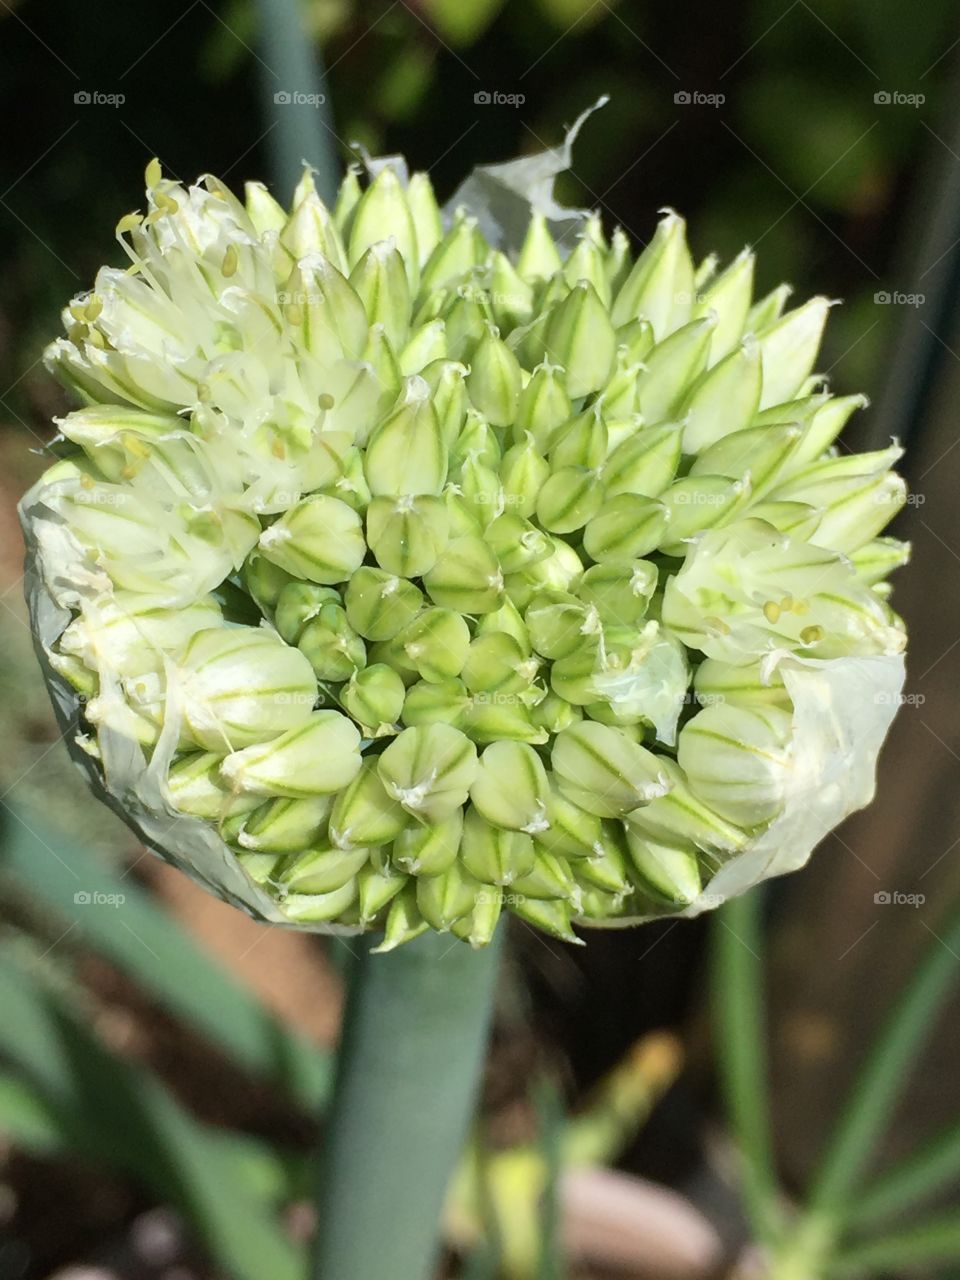 Blossom (green onion)